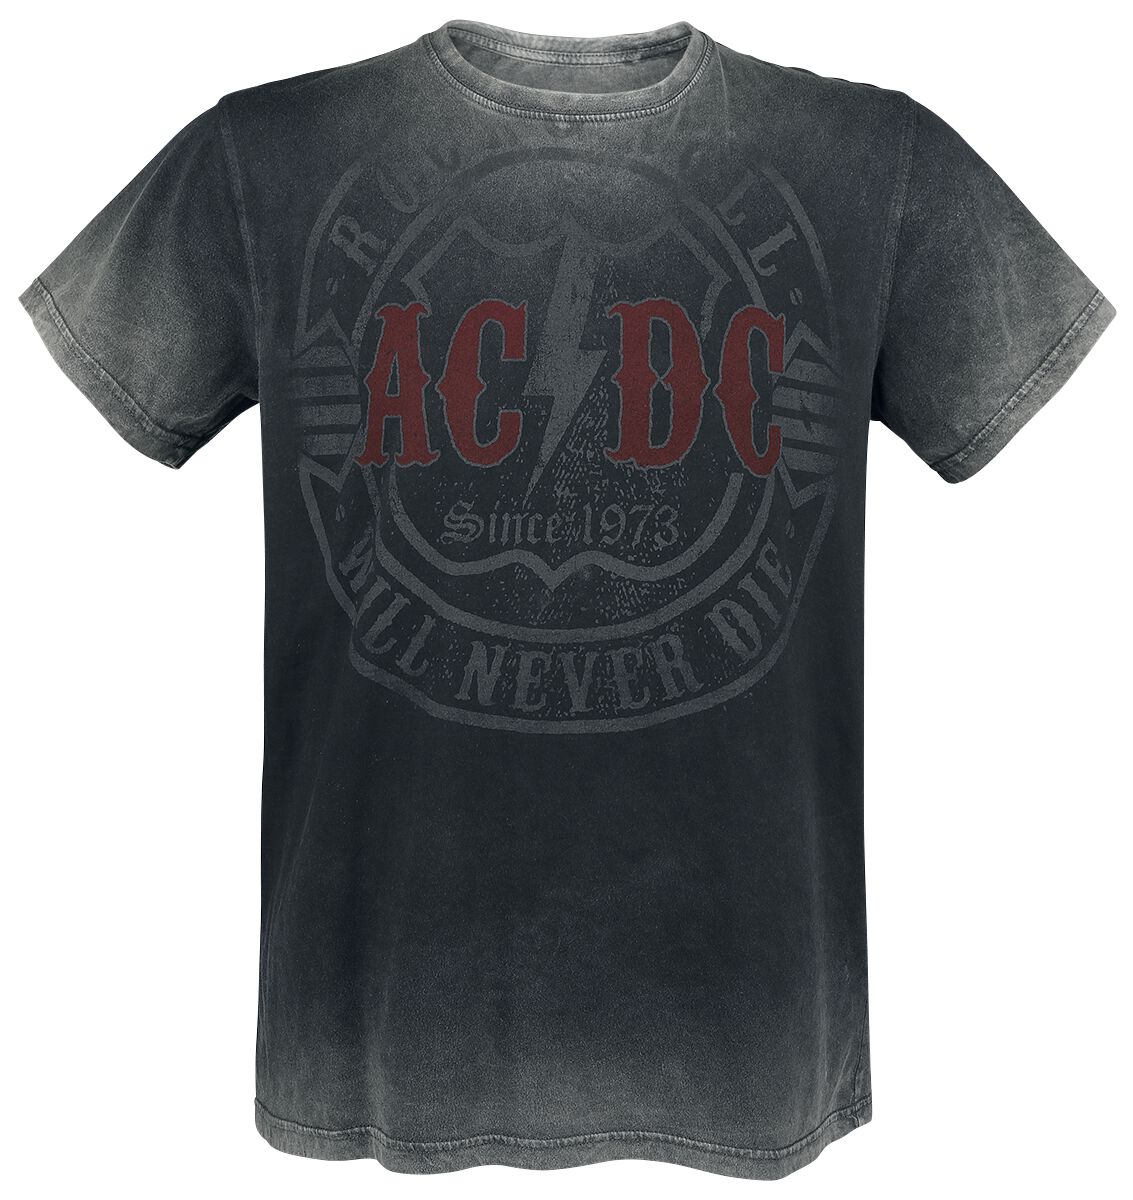 AC/DC Rock & Roll - Will Never Die T-Shirt dunkelgrau in M